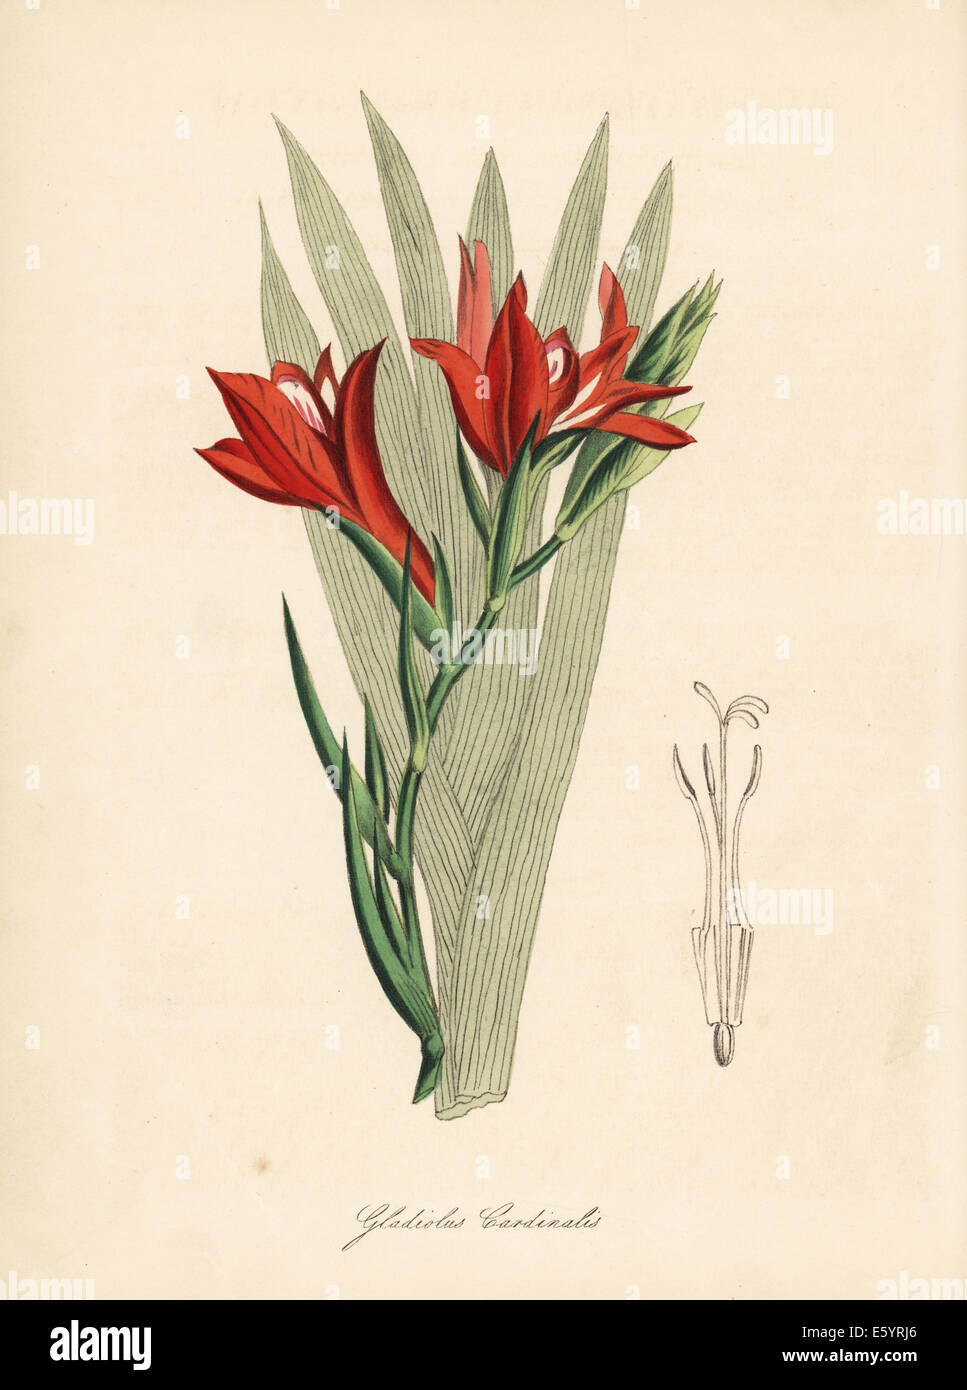 Superb cornflag, Gladiolus cardinalis. Stock Photo